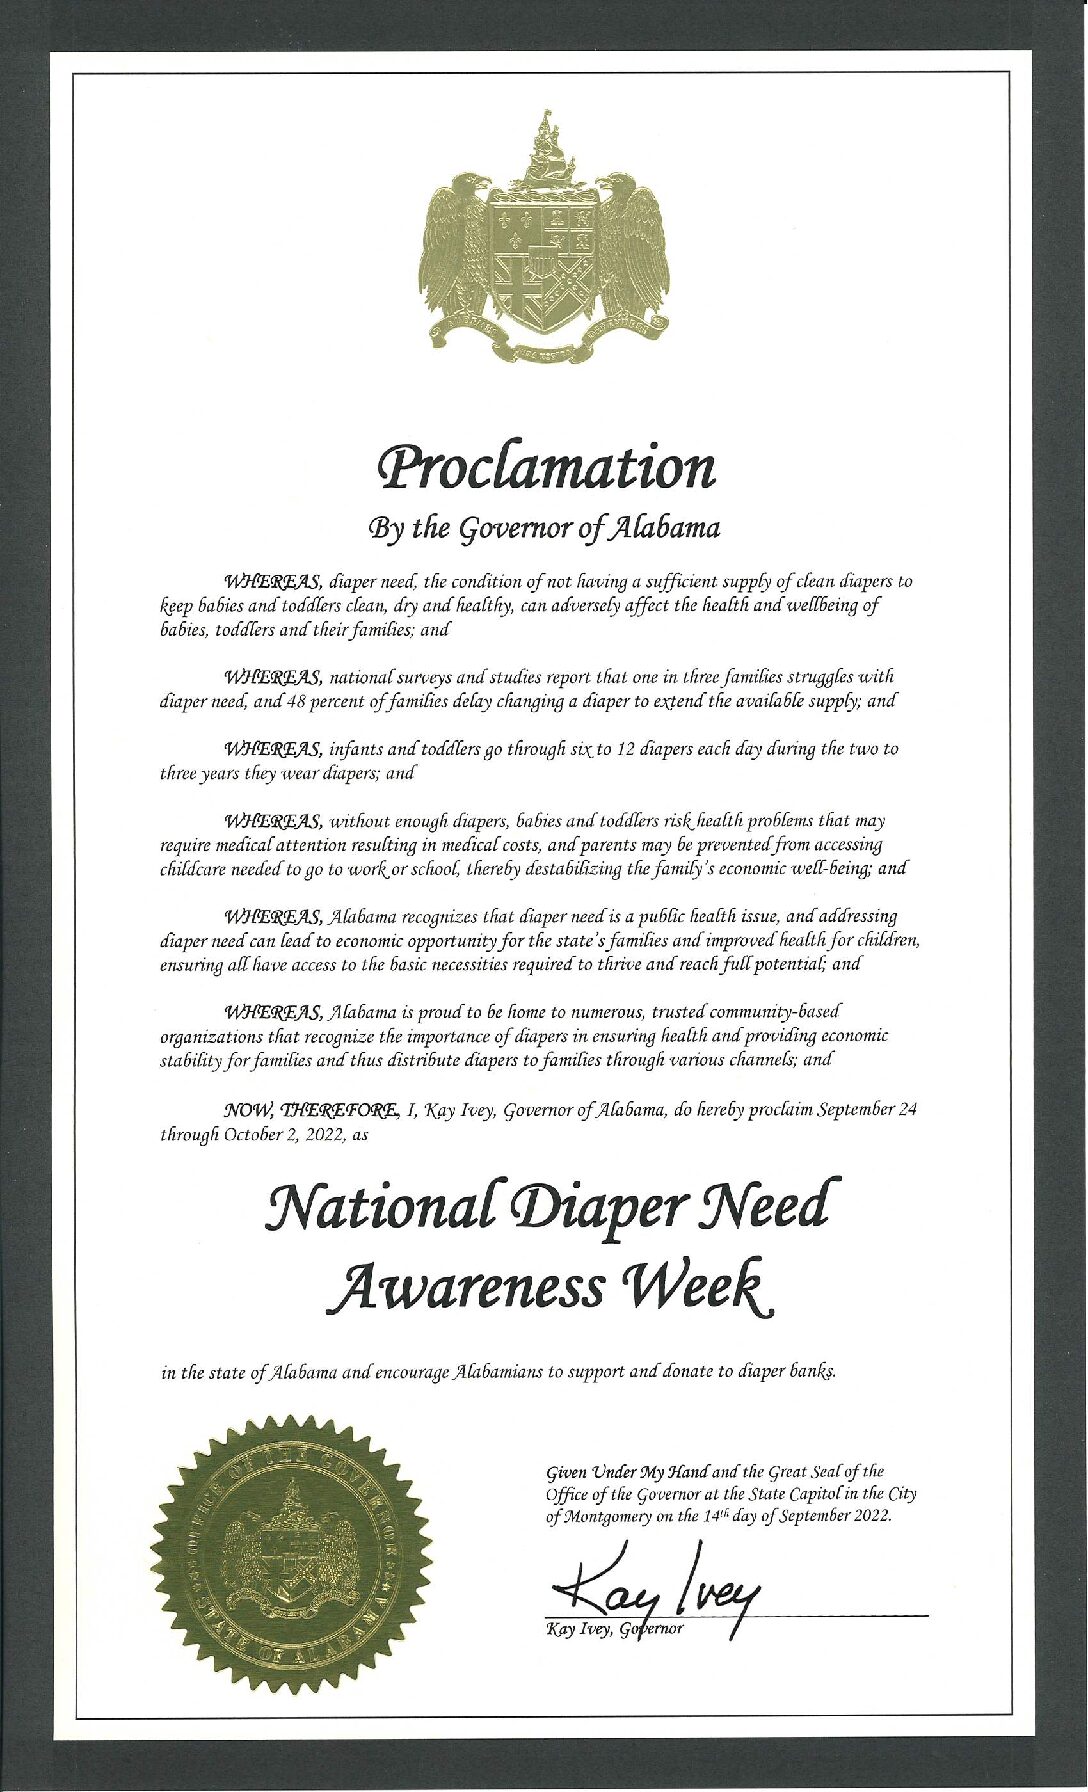 https://governor.alabama.gov/assets/2022/09/National-Diaper-Need-Awareness-Week-pdf.jpg